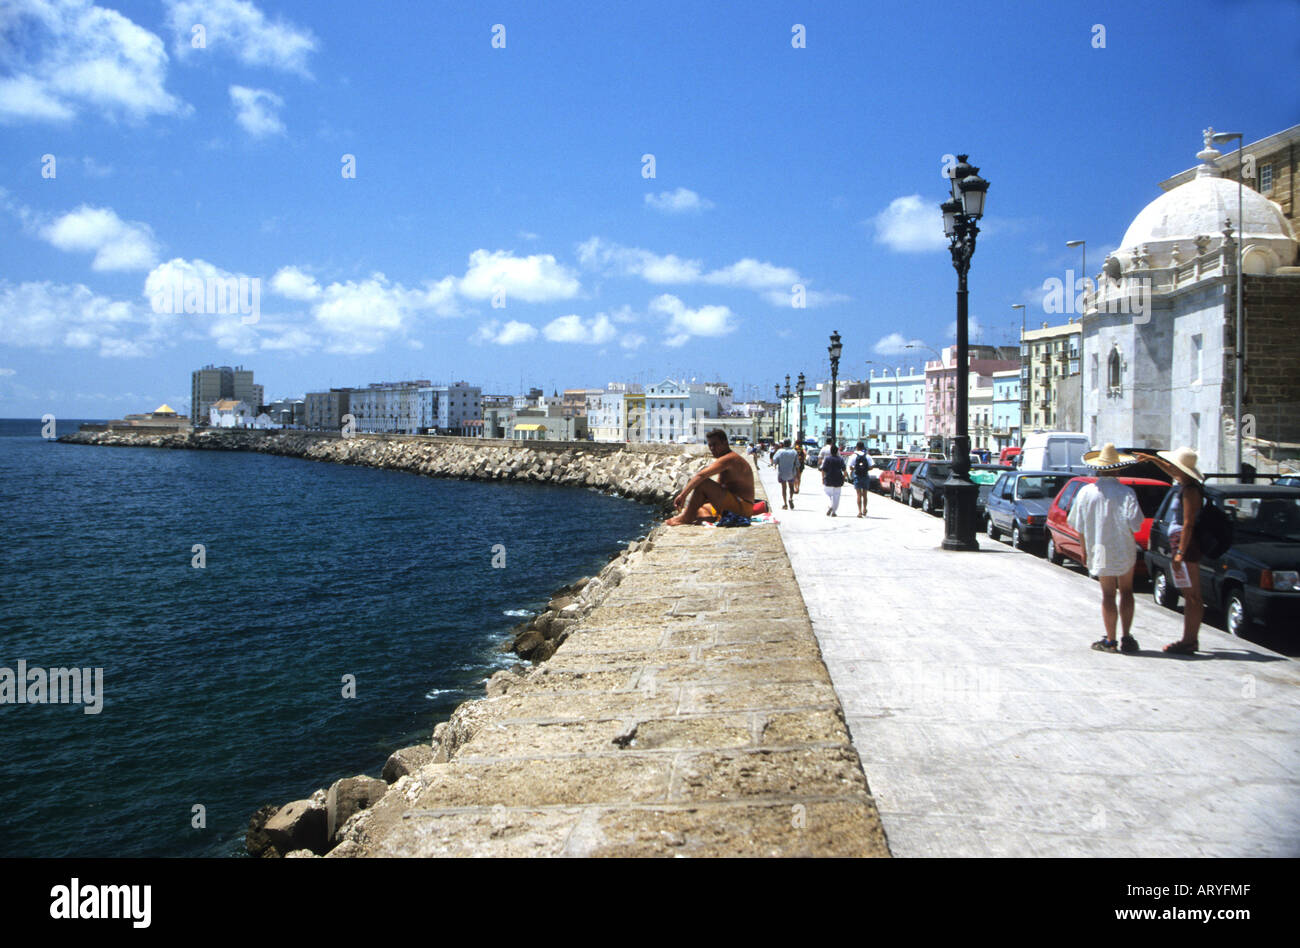 Promenade ,seafront of Cadiz city overlooking the Atlantic Ocean.Spain Stock Photo